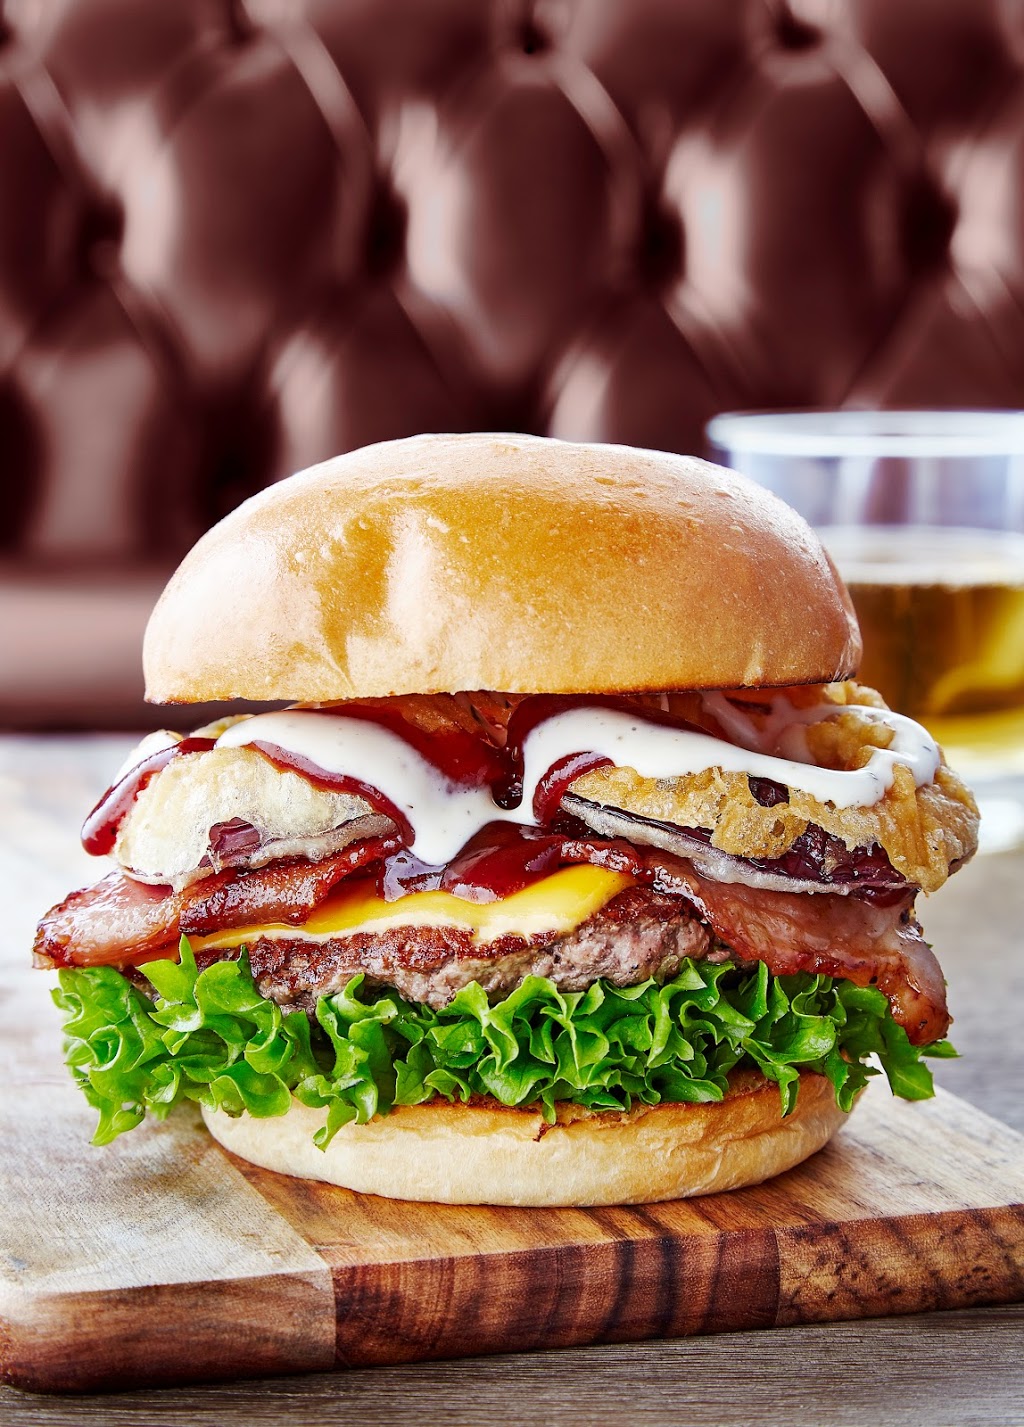 Burgers Anonymous X Hopstix | restaurant | 15/5 Mackinder St, Campsie NSW 2194, Australia | 0280941073 OR +61 2 8094 1073